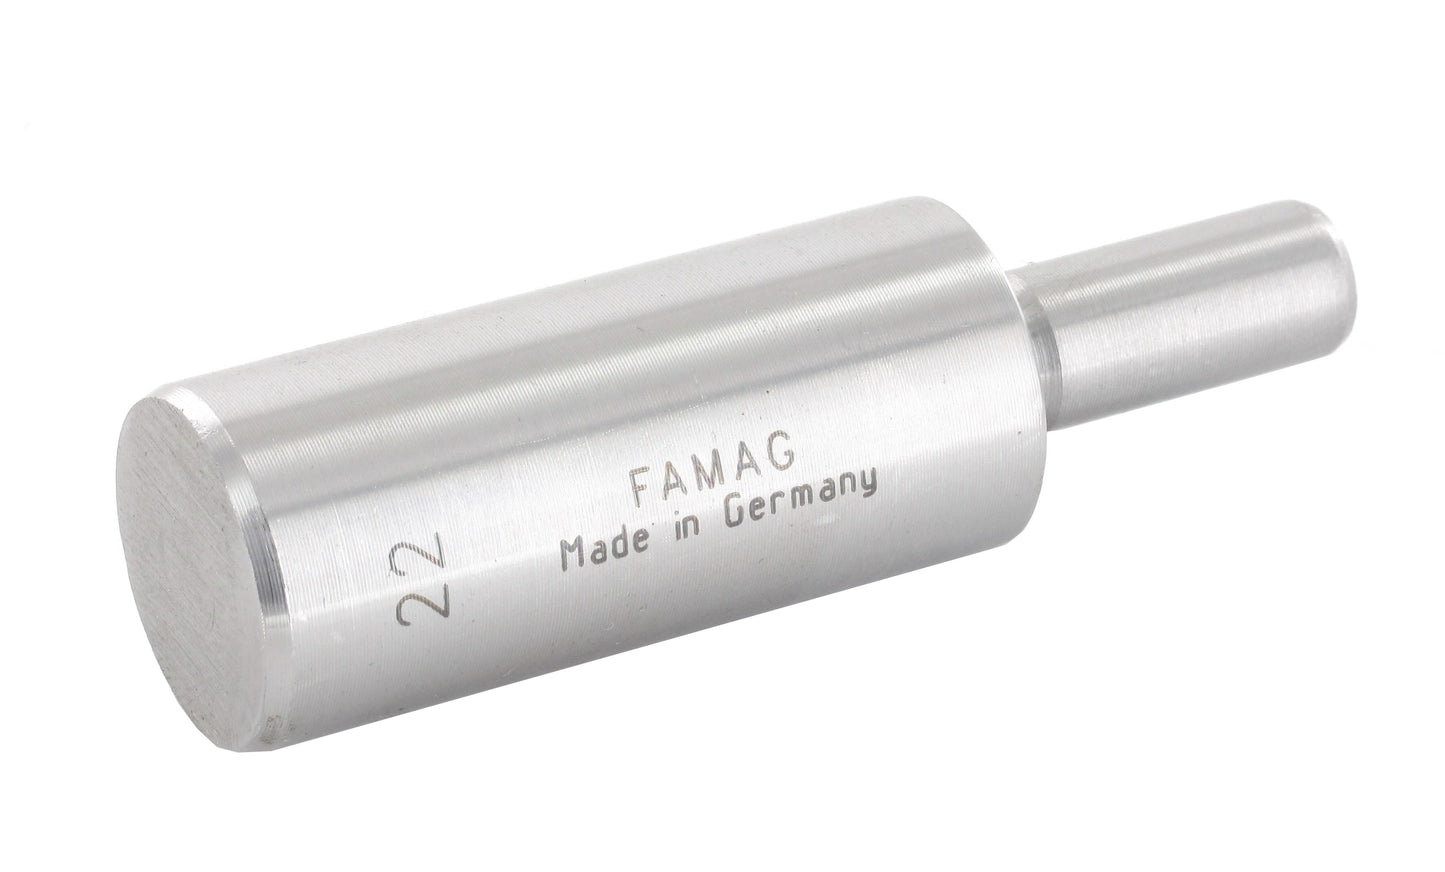 FAMAG 14 mm Guding Pin For Bormax 2.0 Prima 1614 Long Series 44.45mm - 120mm, 1619014